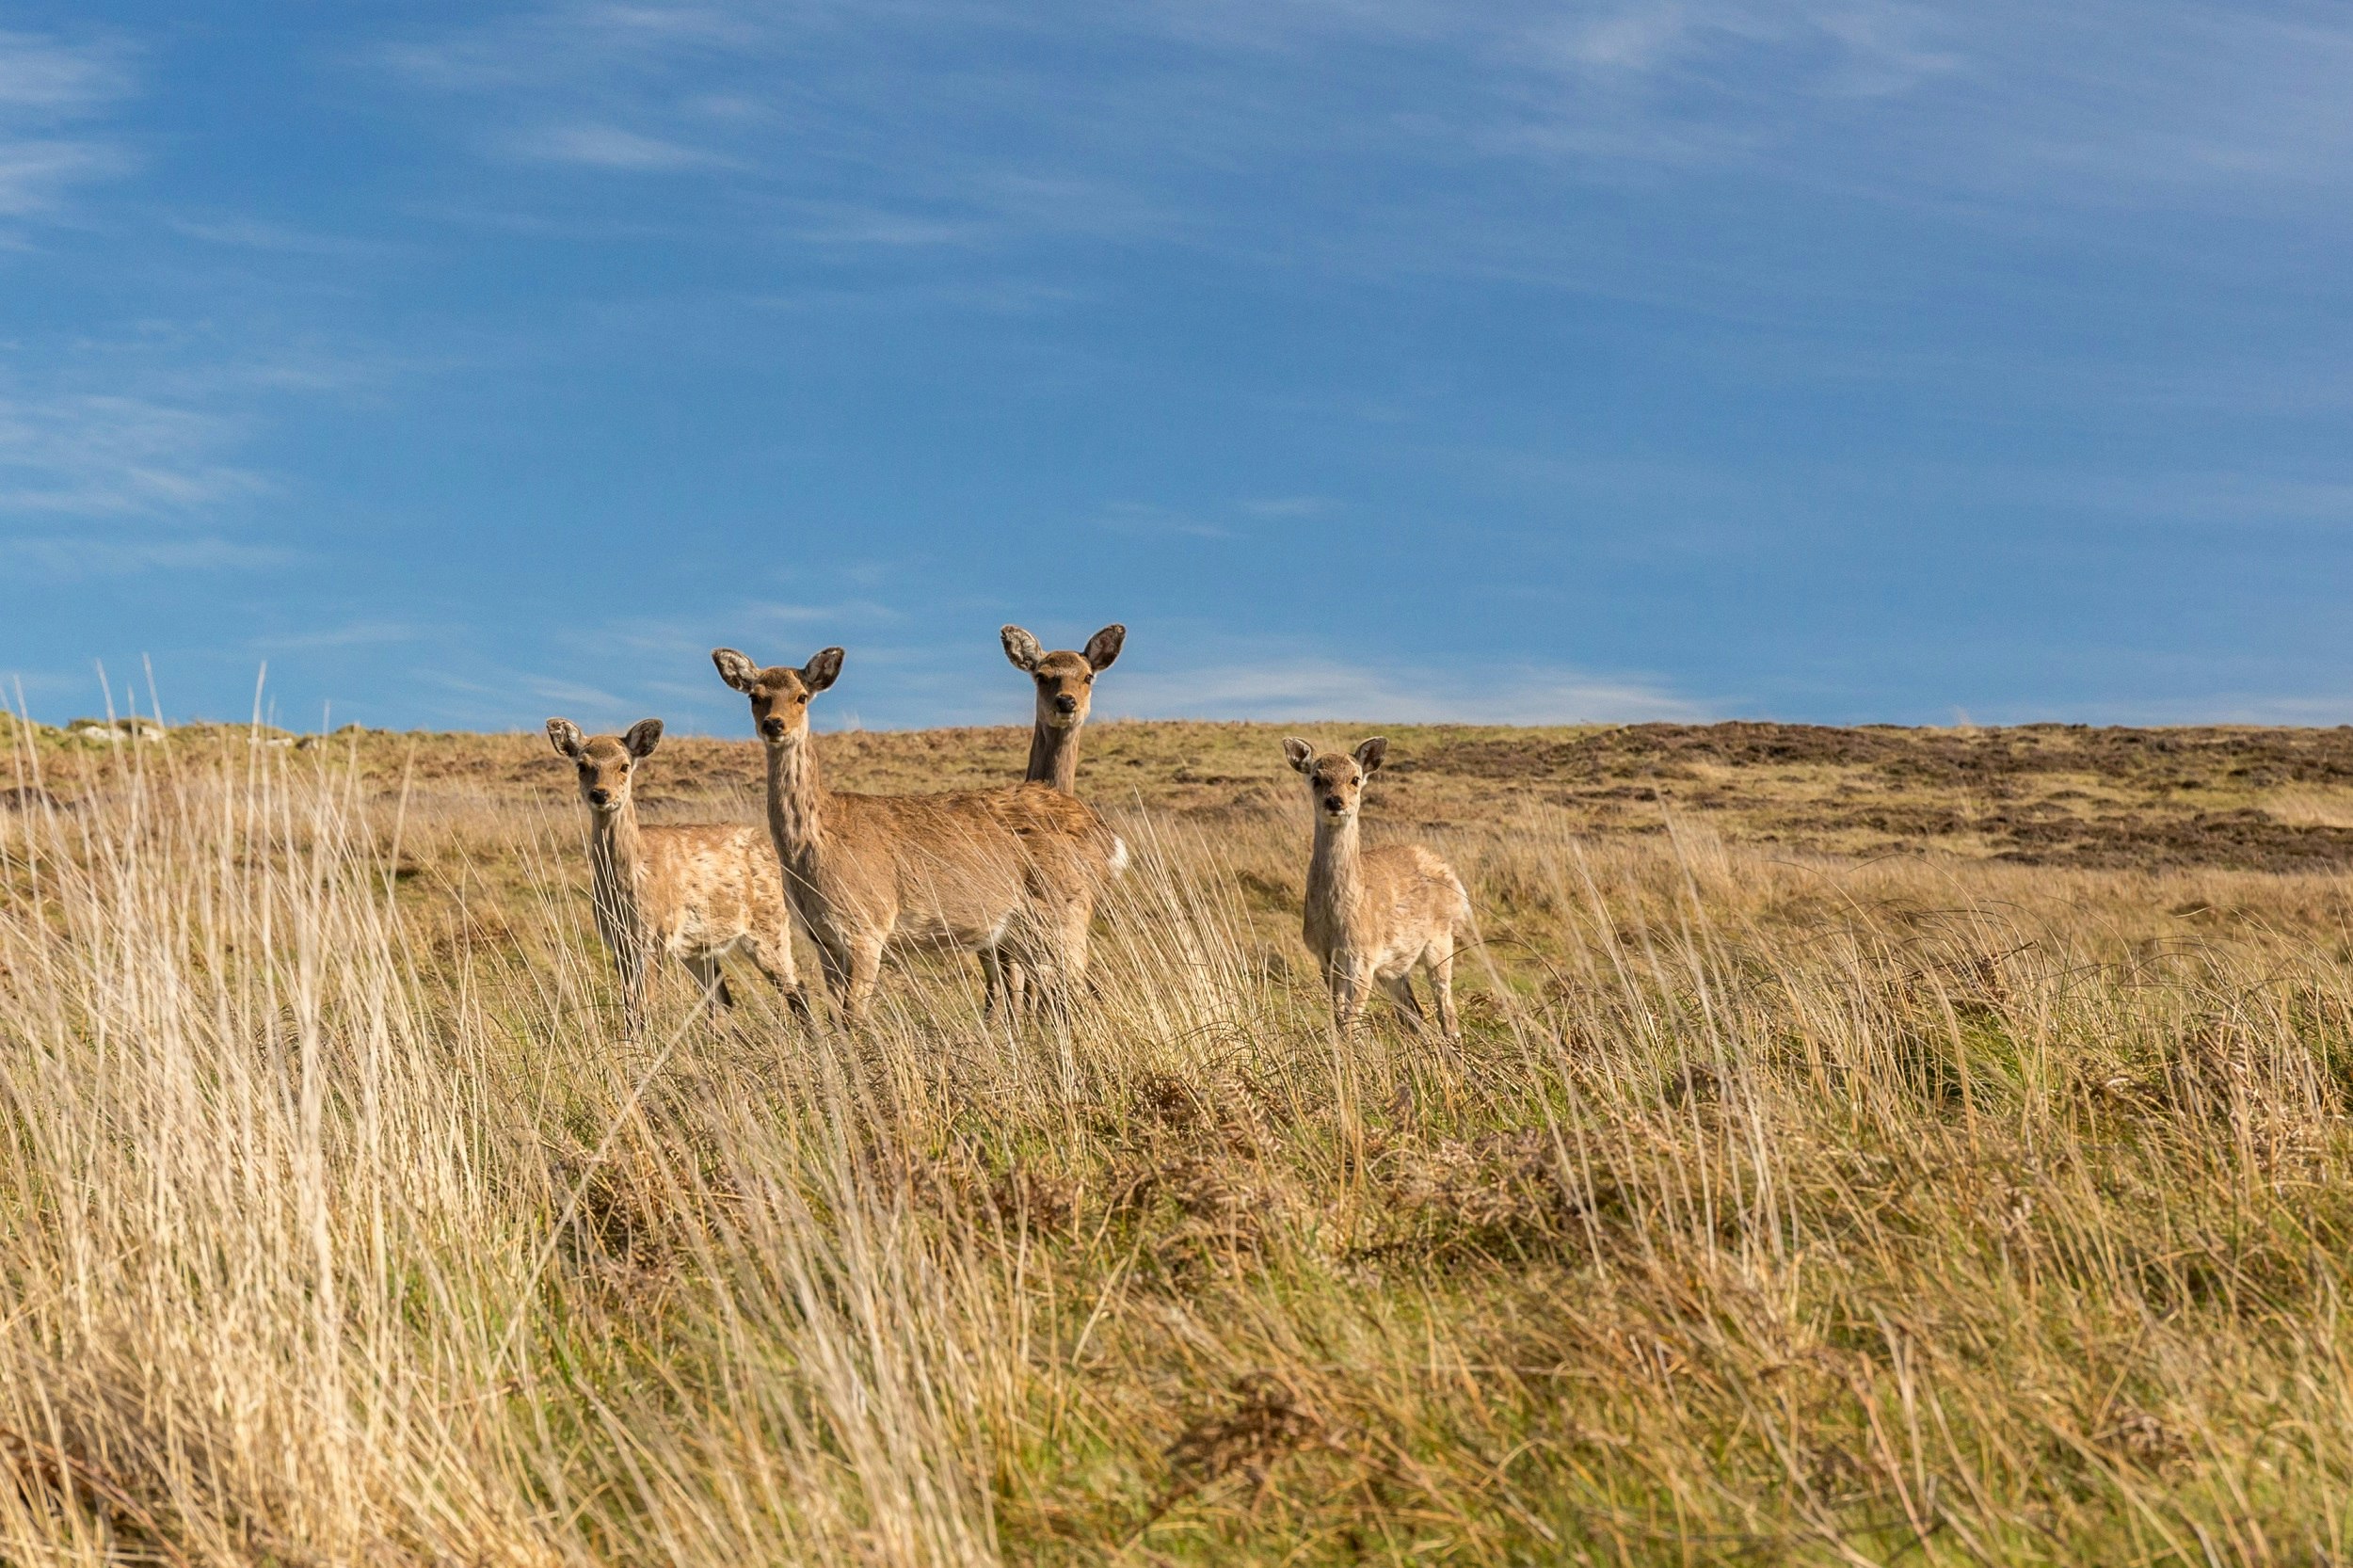 Four light-brown deer standing in long grass look alert towards the camera